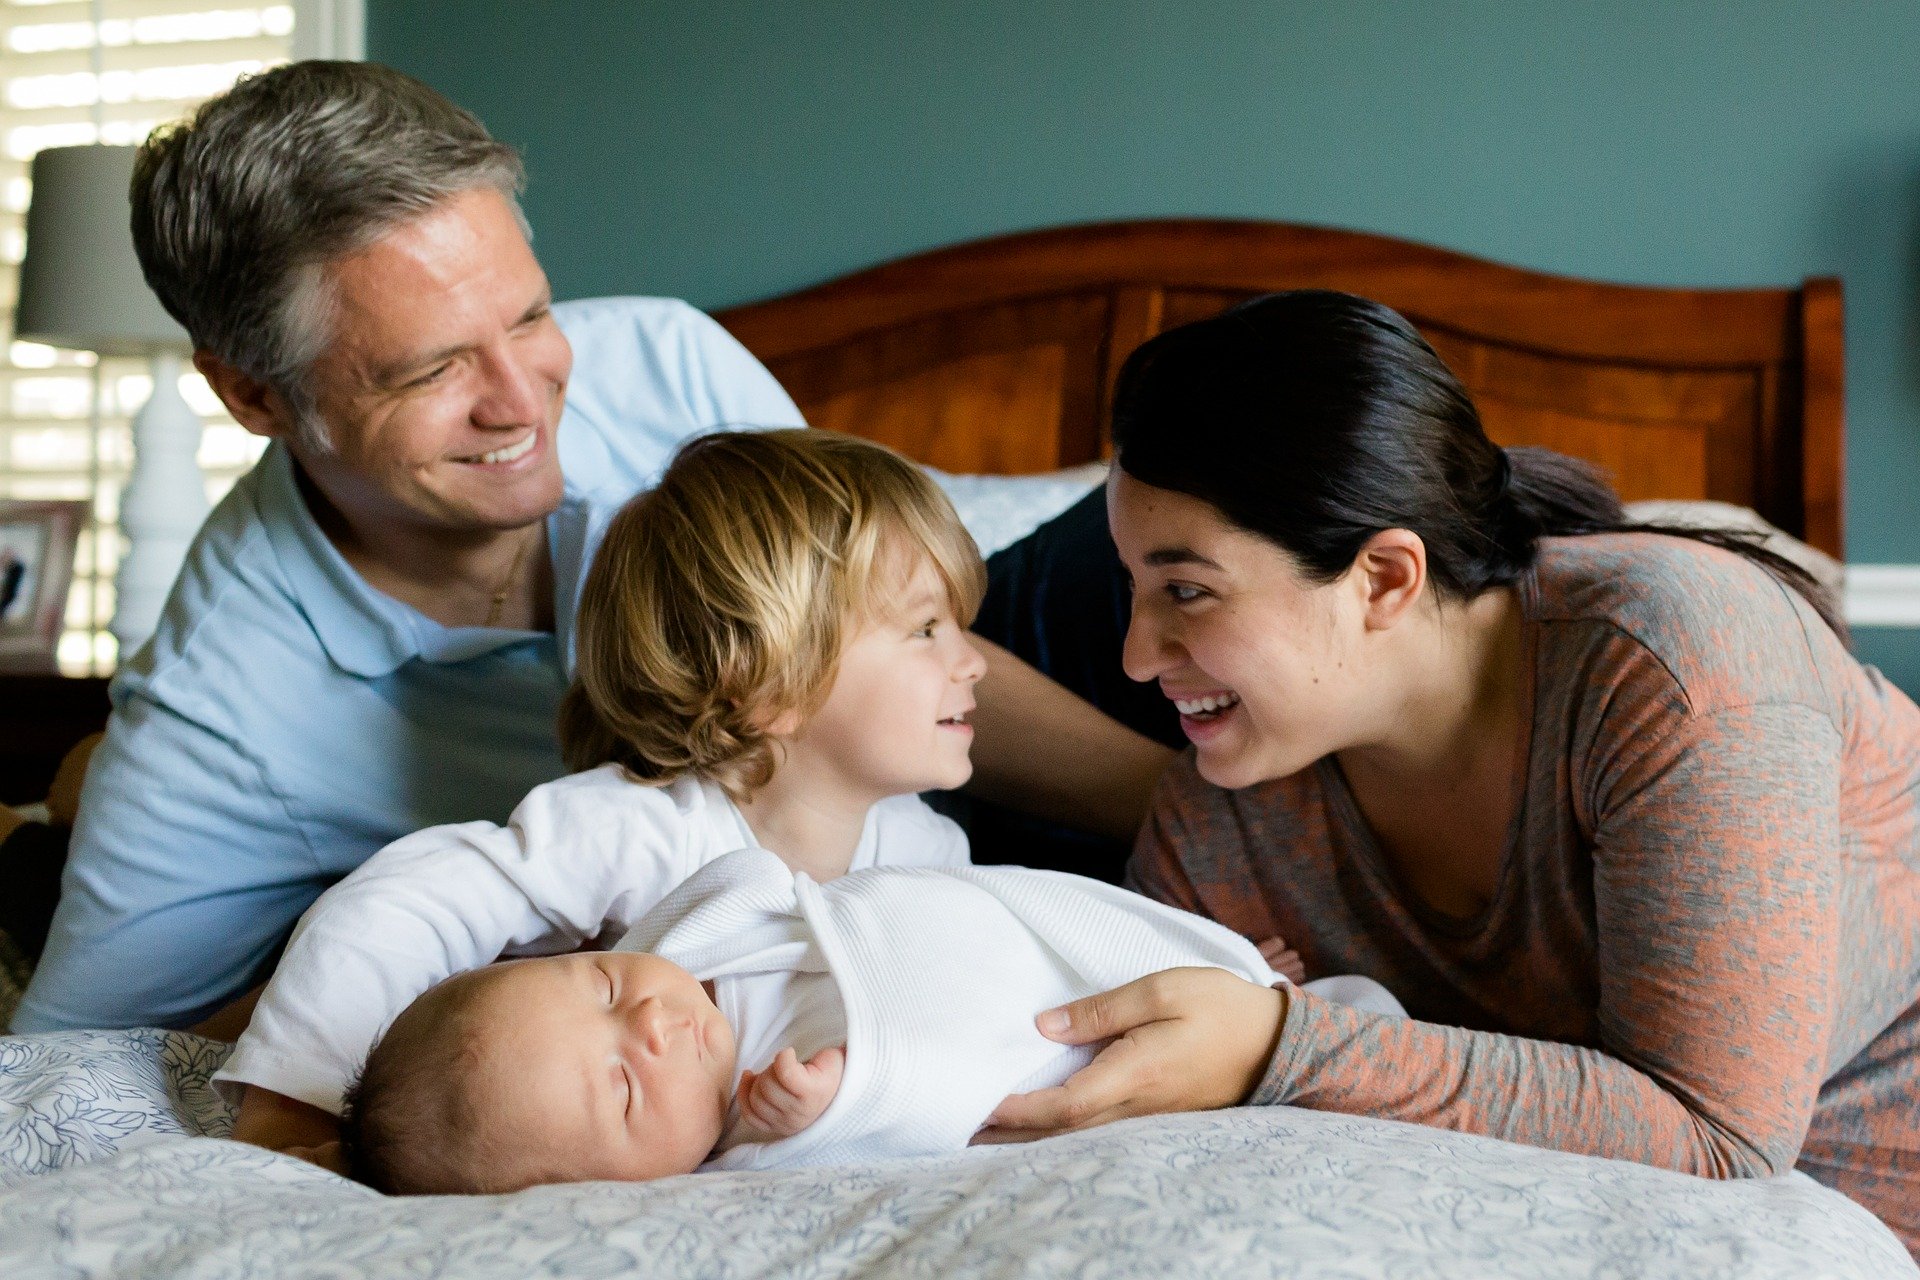 Family Health & Wellness: 5 Tips That Matter